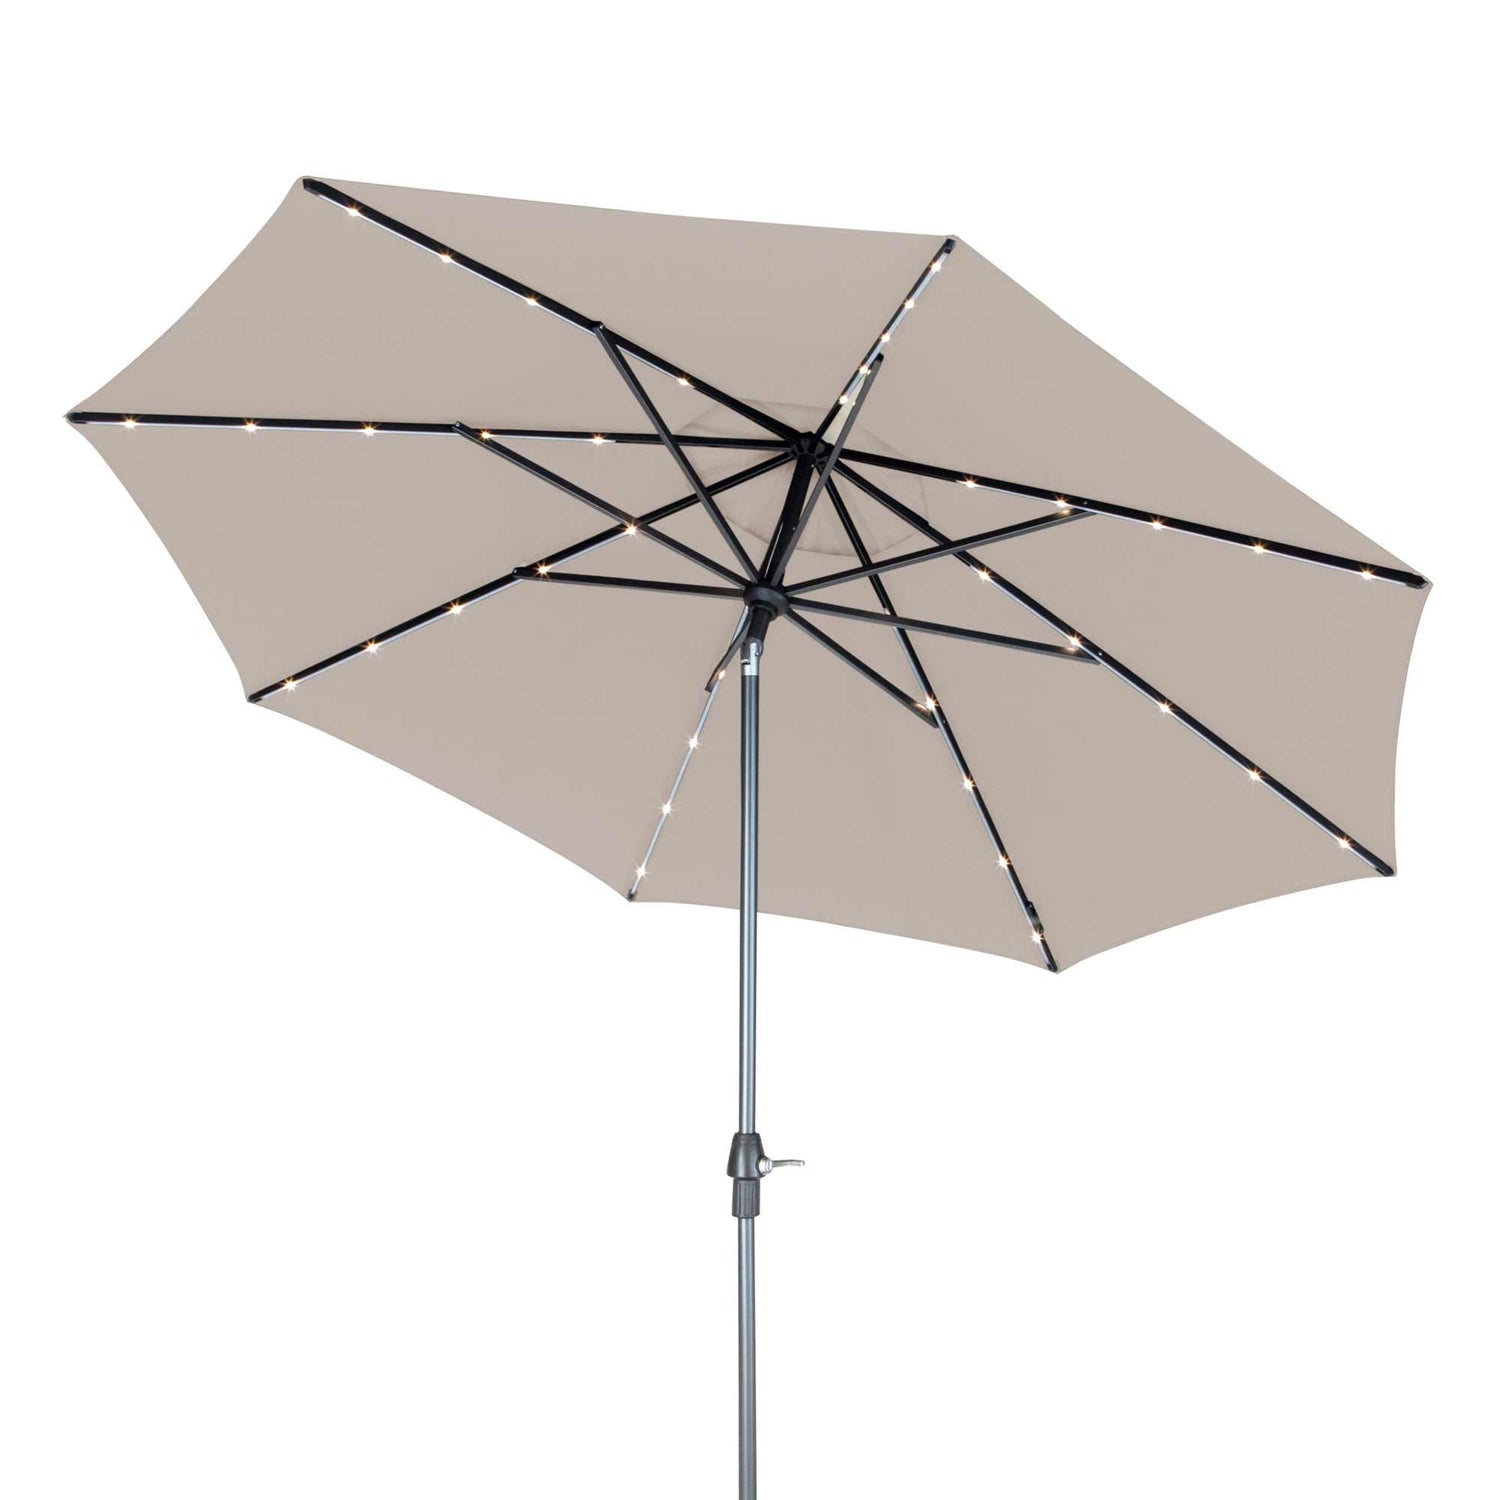 PWS30-184-3.0m-wind-up-parasol-with-auto-tilt-and-LED-lights-grey-stone-tilt-STUDIO-scaled-kik.jpg